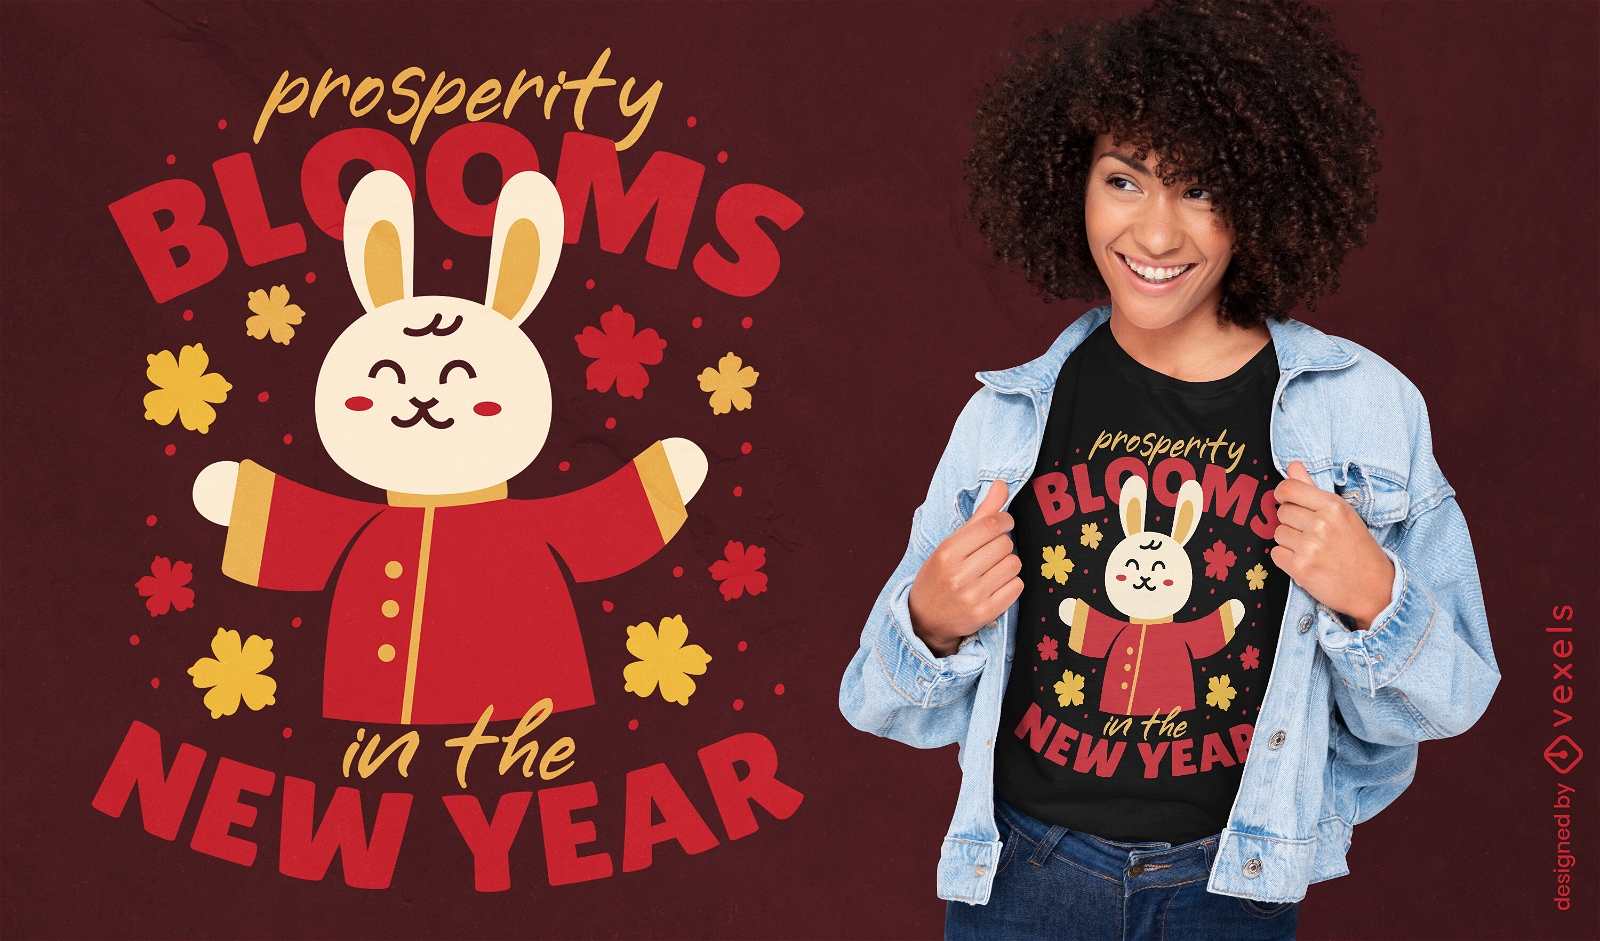 New year prosperity t-shirt design